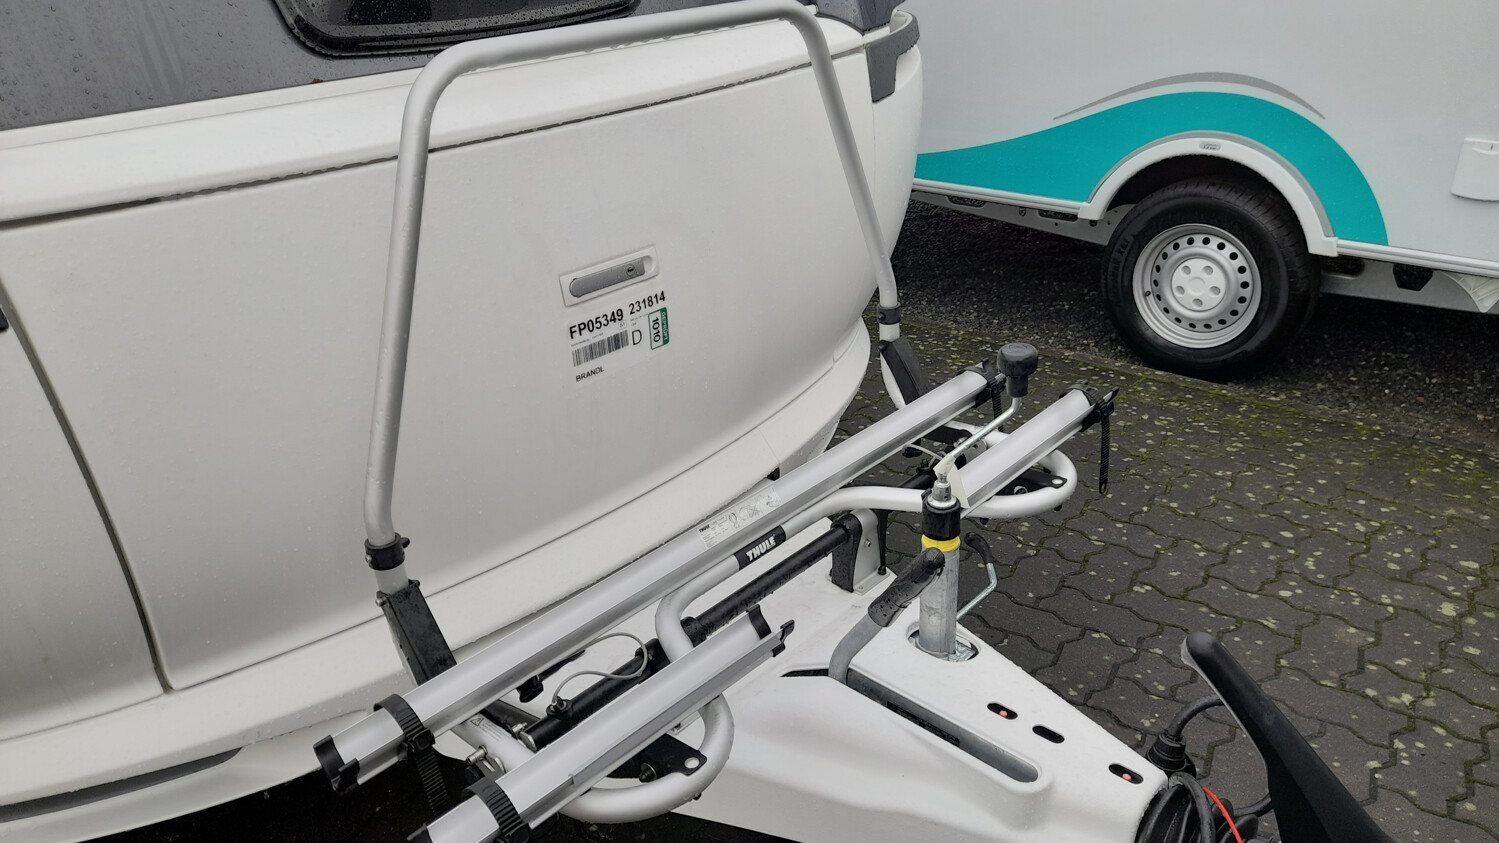 Venta de Hobby Excellent 540 UL Mover Single Beds Rondzit caravana Países  Bajos Drachten, EE36598